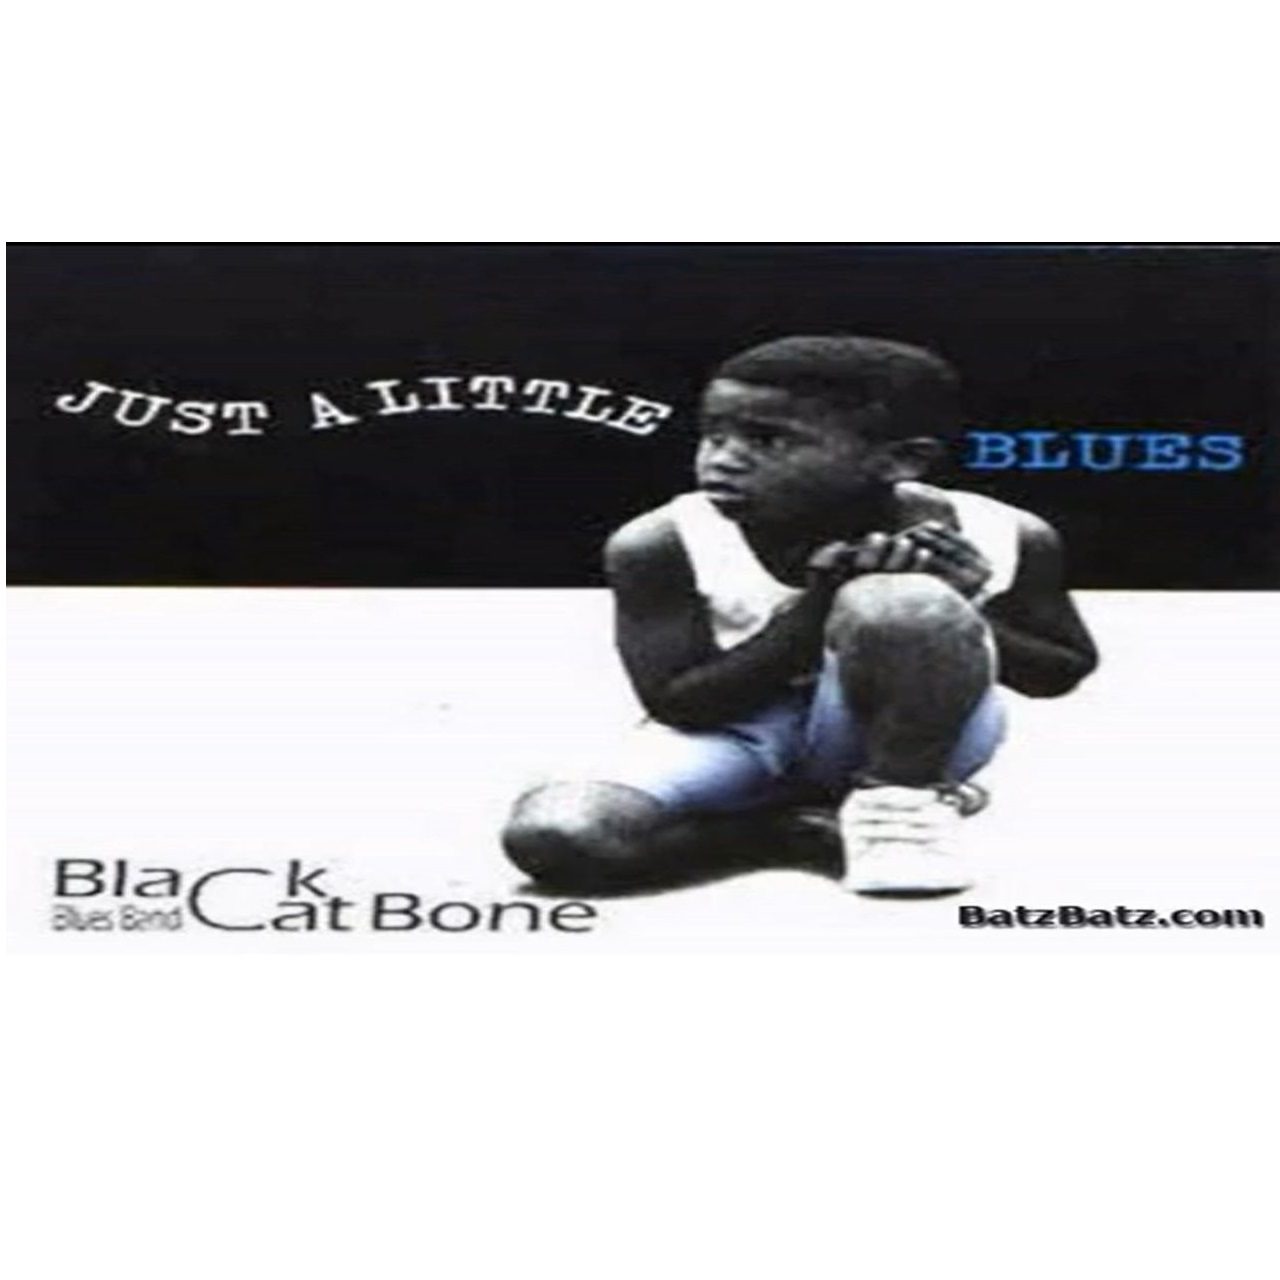 Black Cat Bones - Just A Little Blues cover album